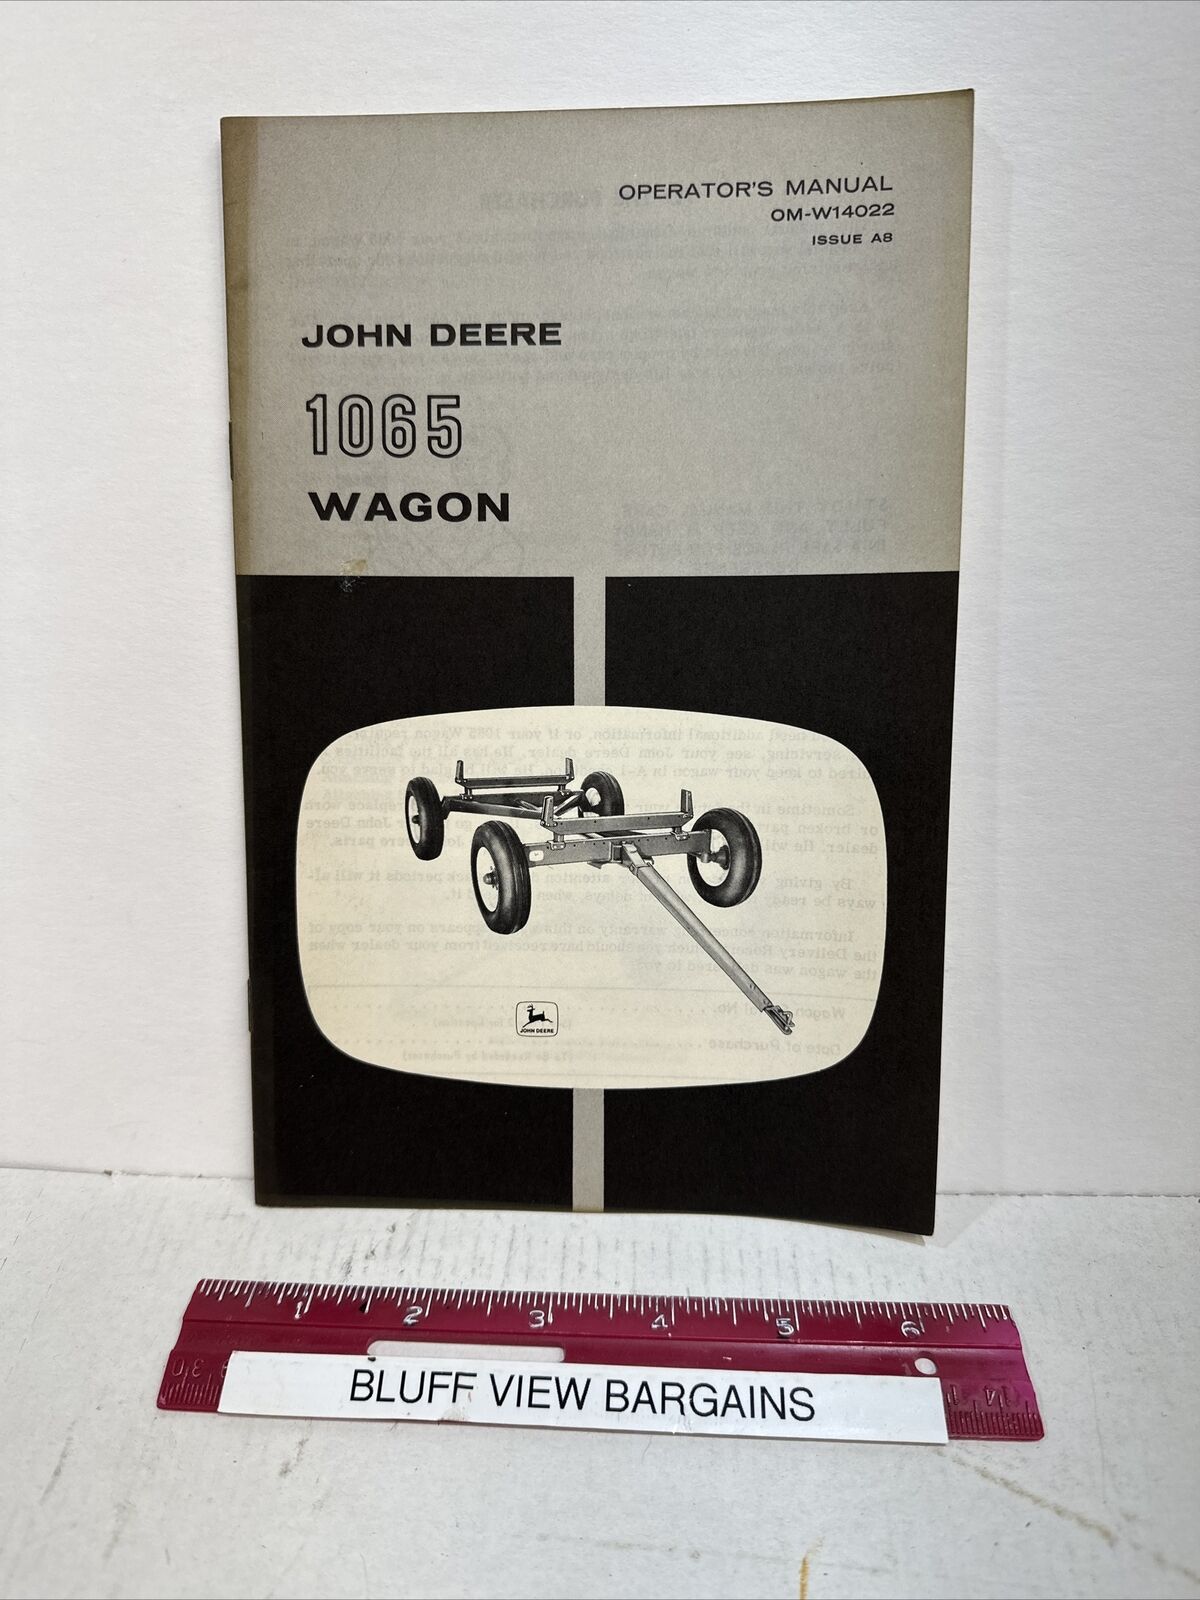 1950's John Deere Operator's Manual OM-W14022 Issue A8 Wagon 1065